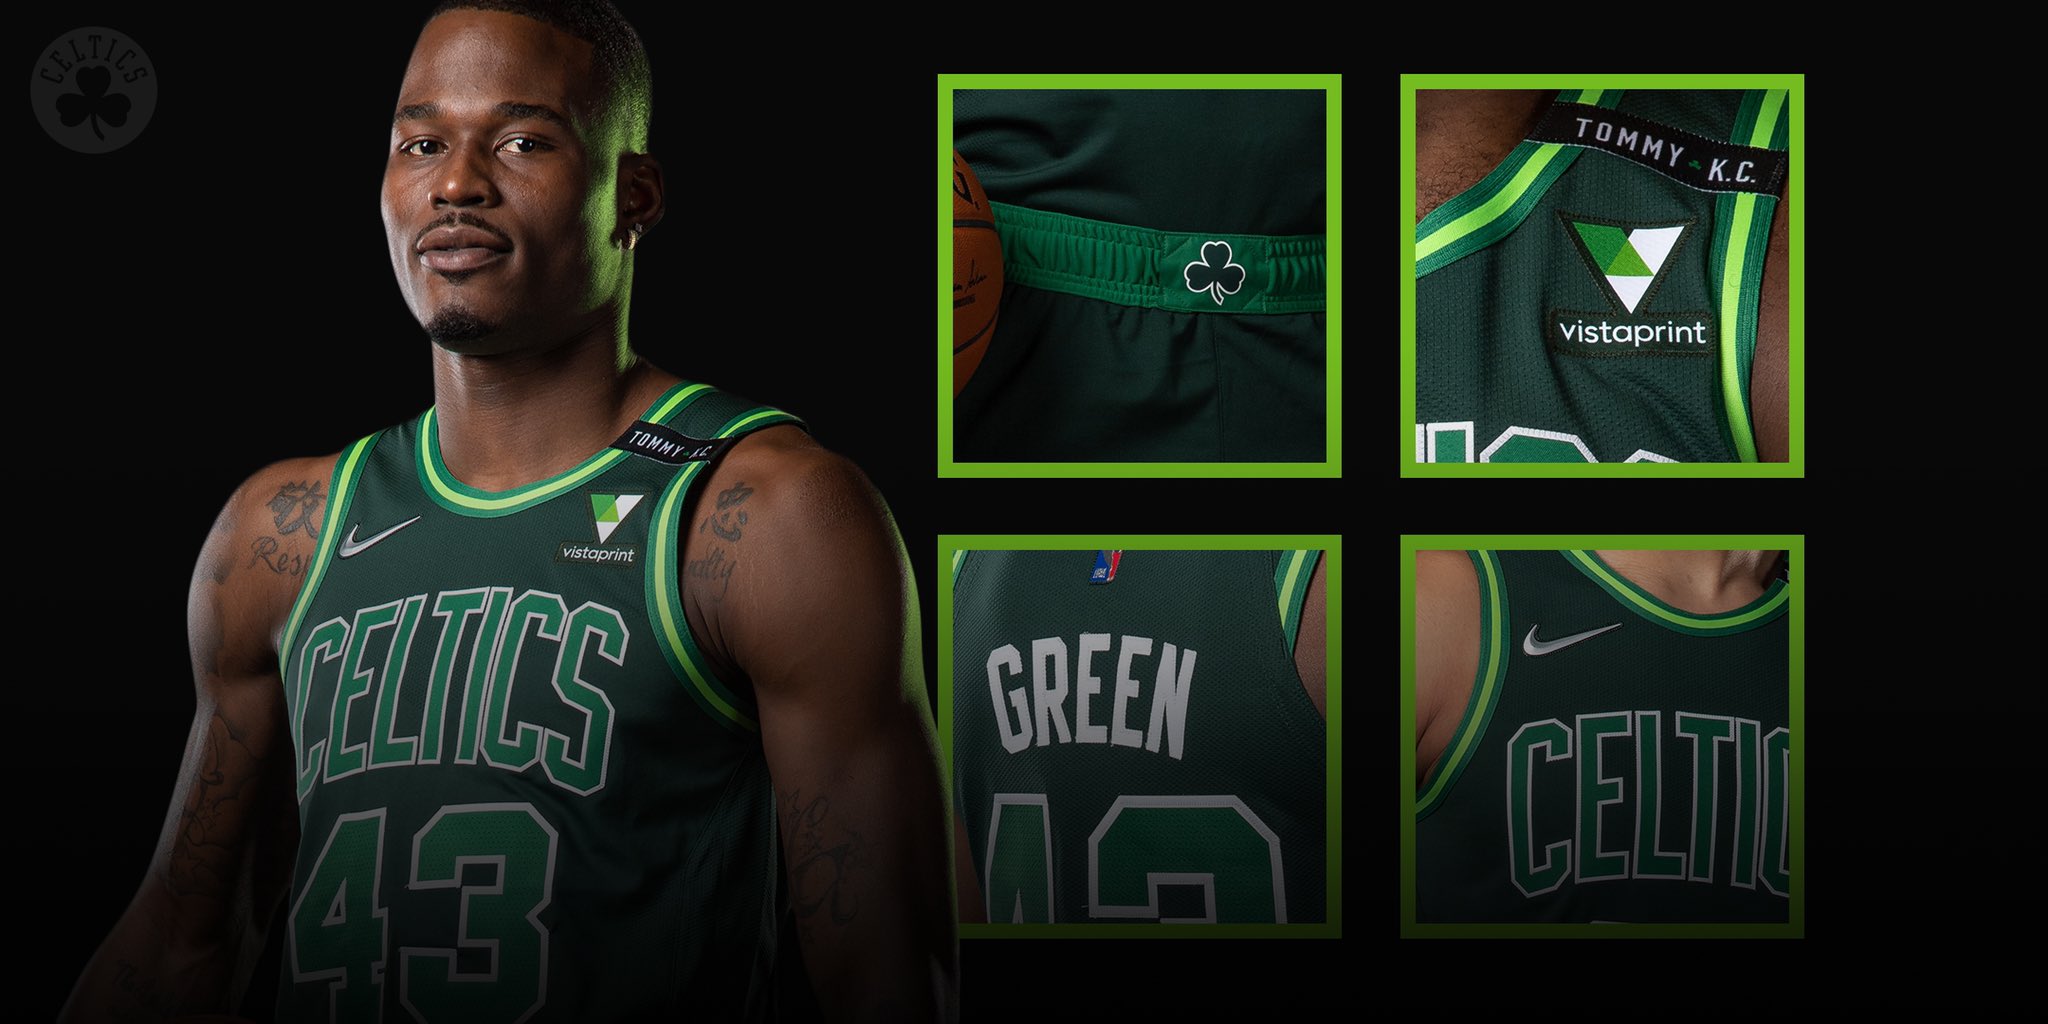 Celtics jerseys will now have Vistaprint logo with new partnership